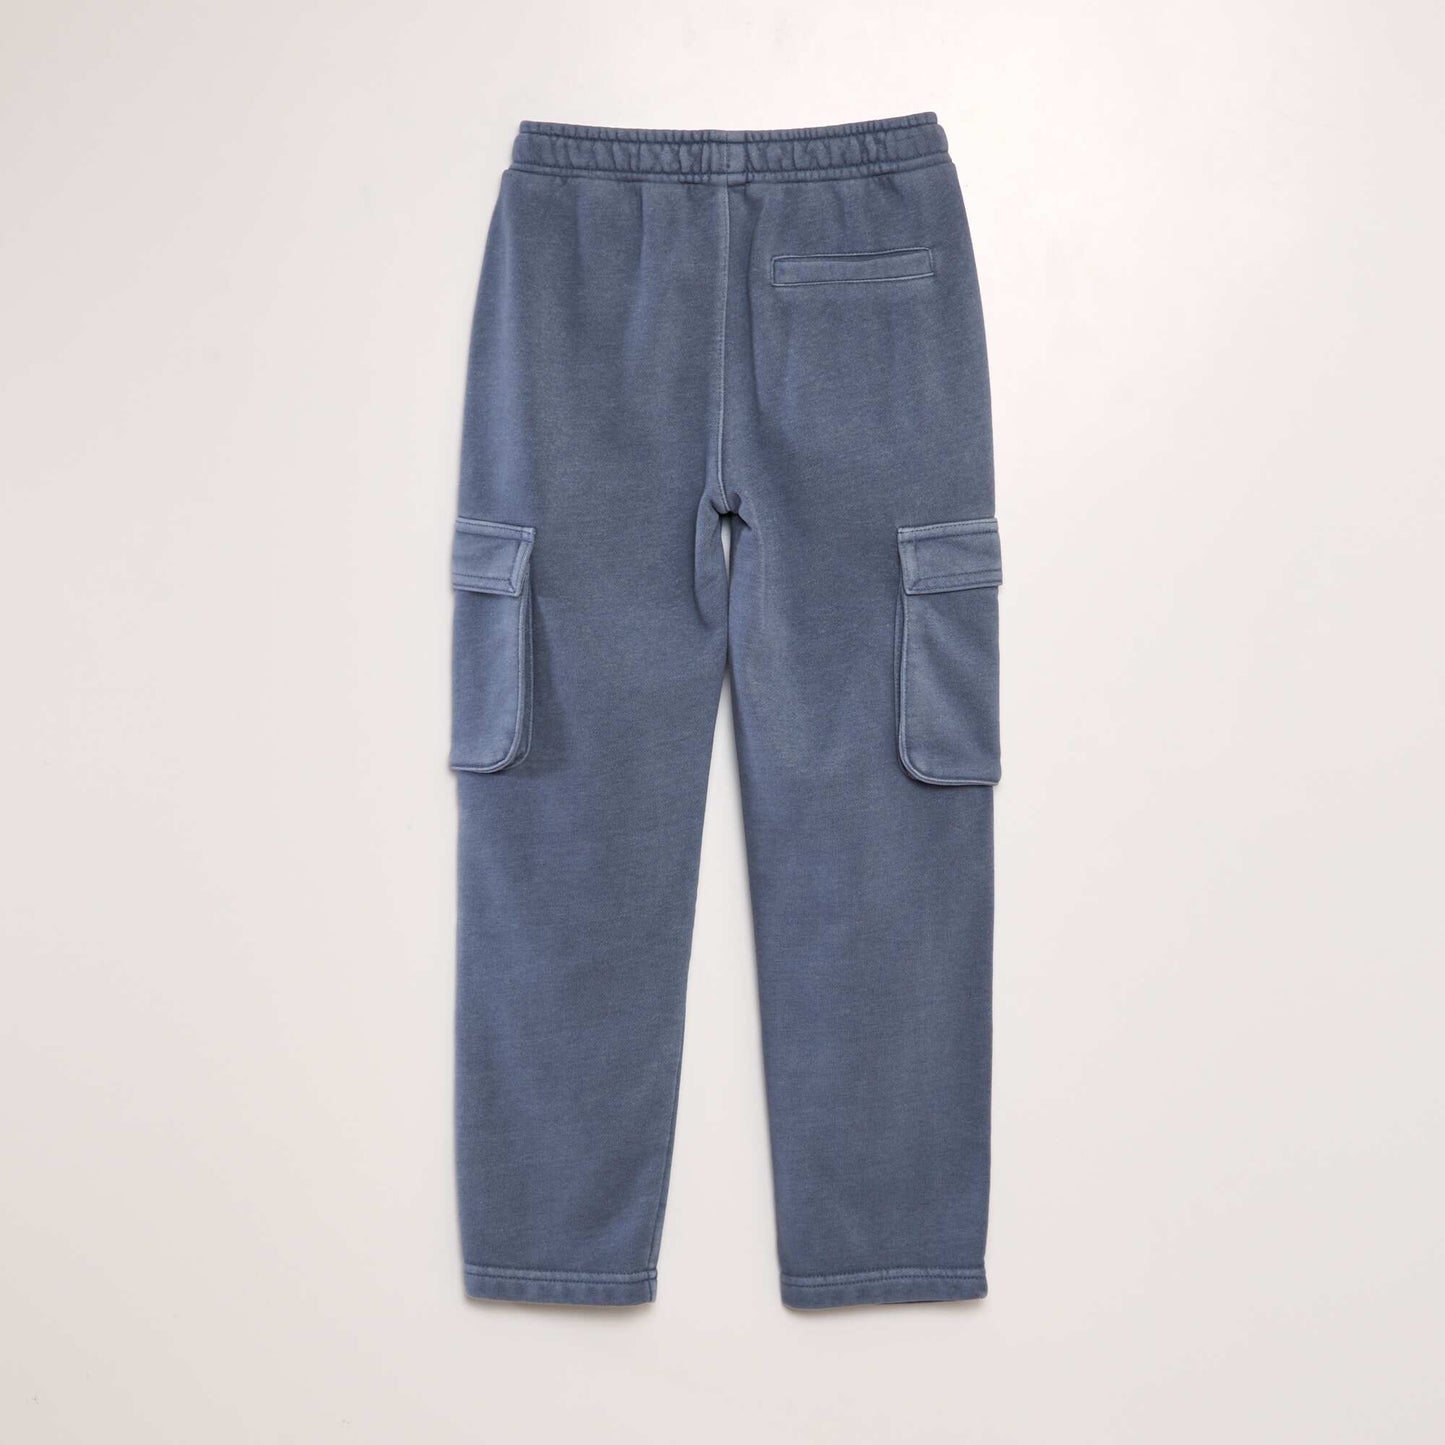 Pantalon droit avec poches à rabat Bleu